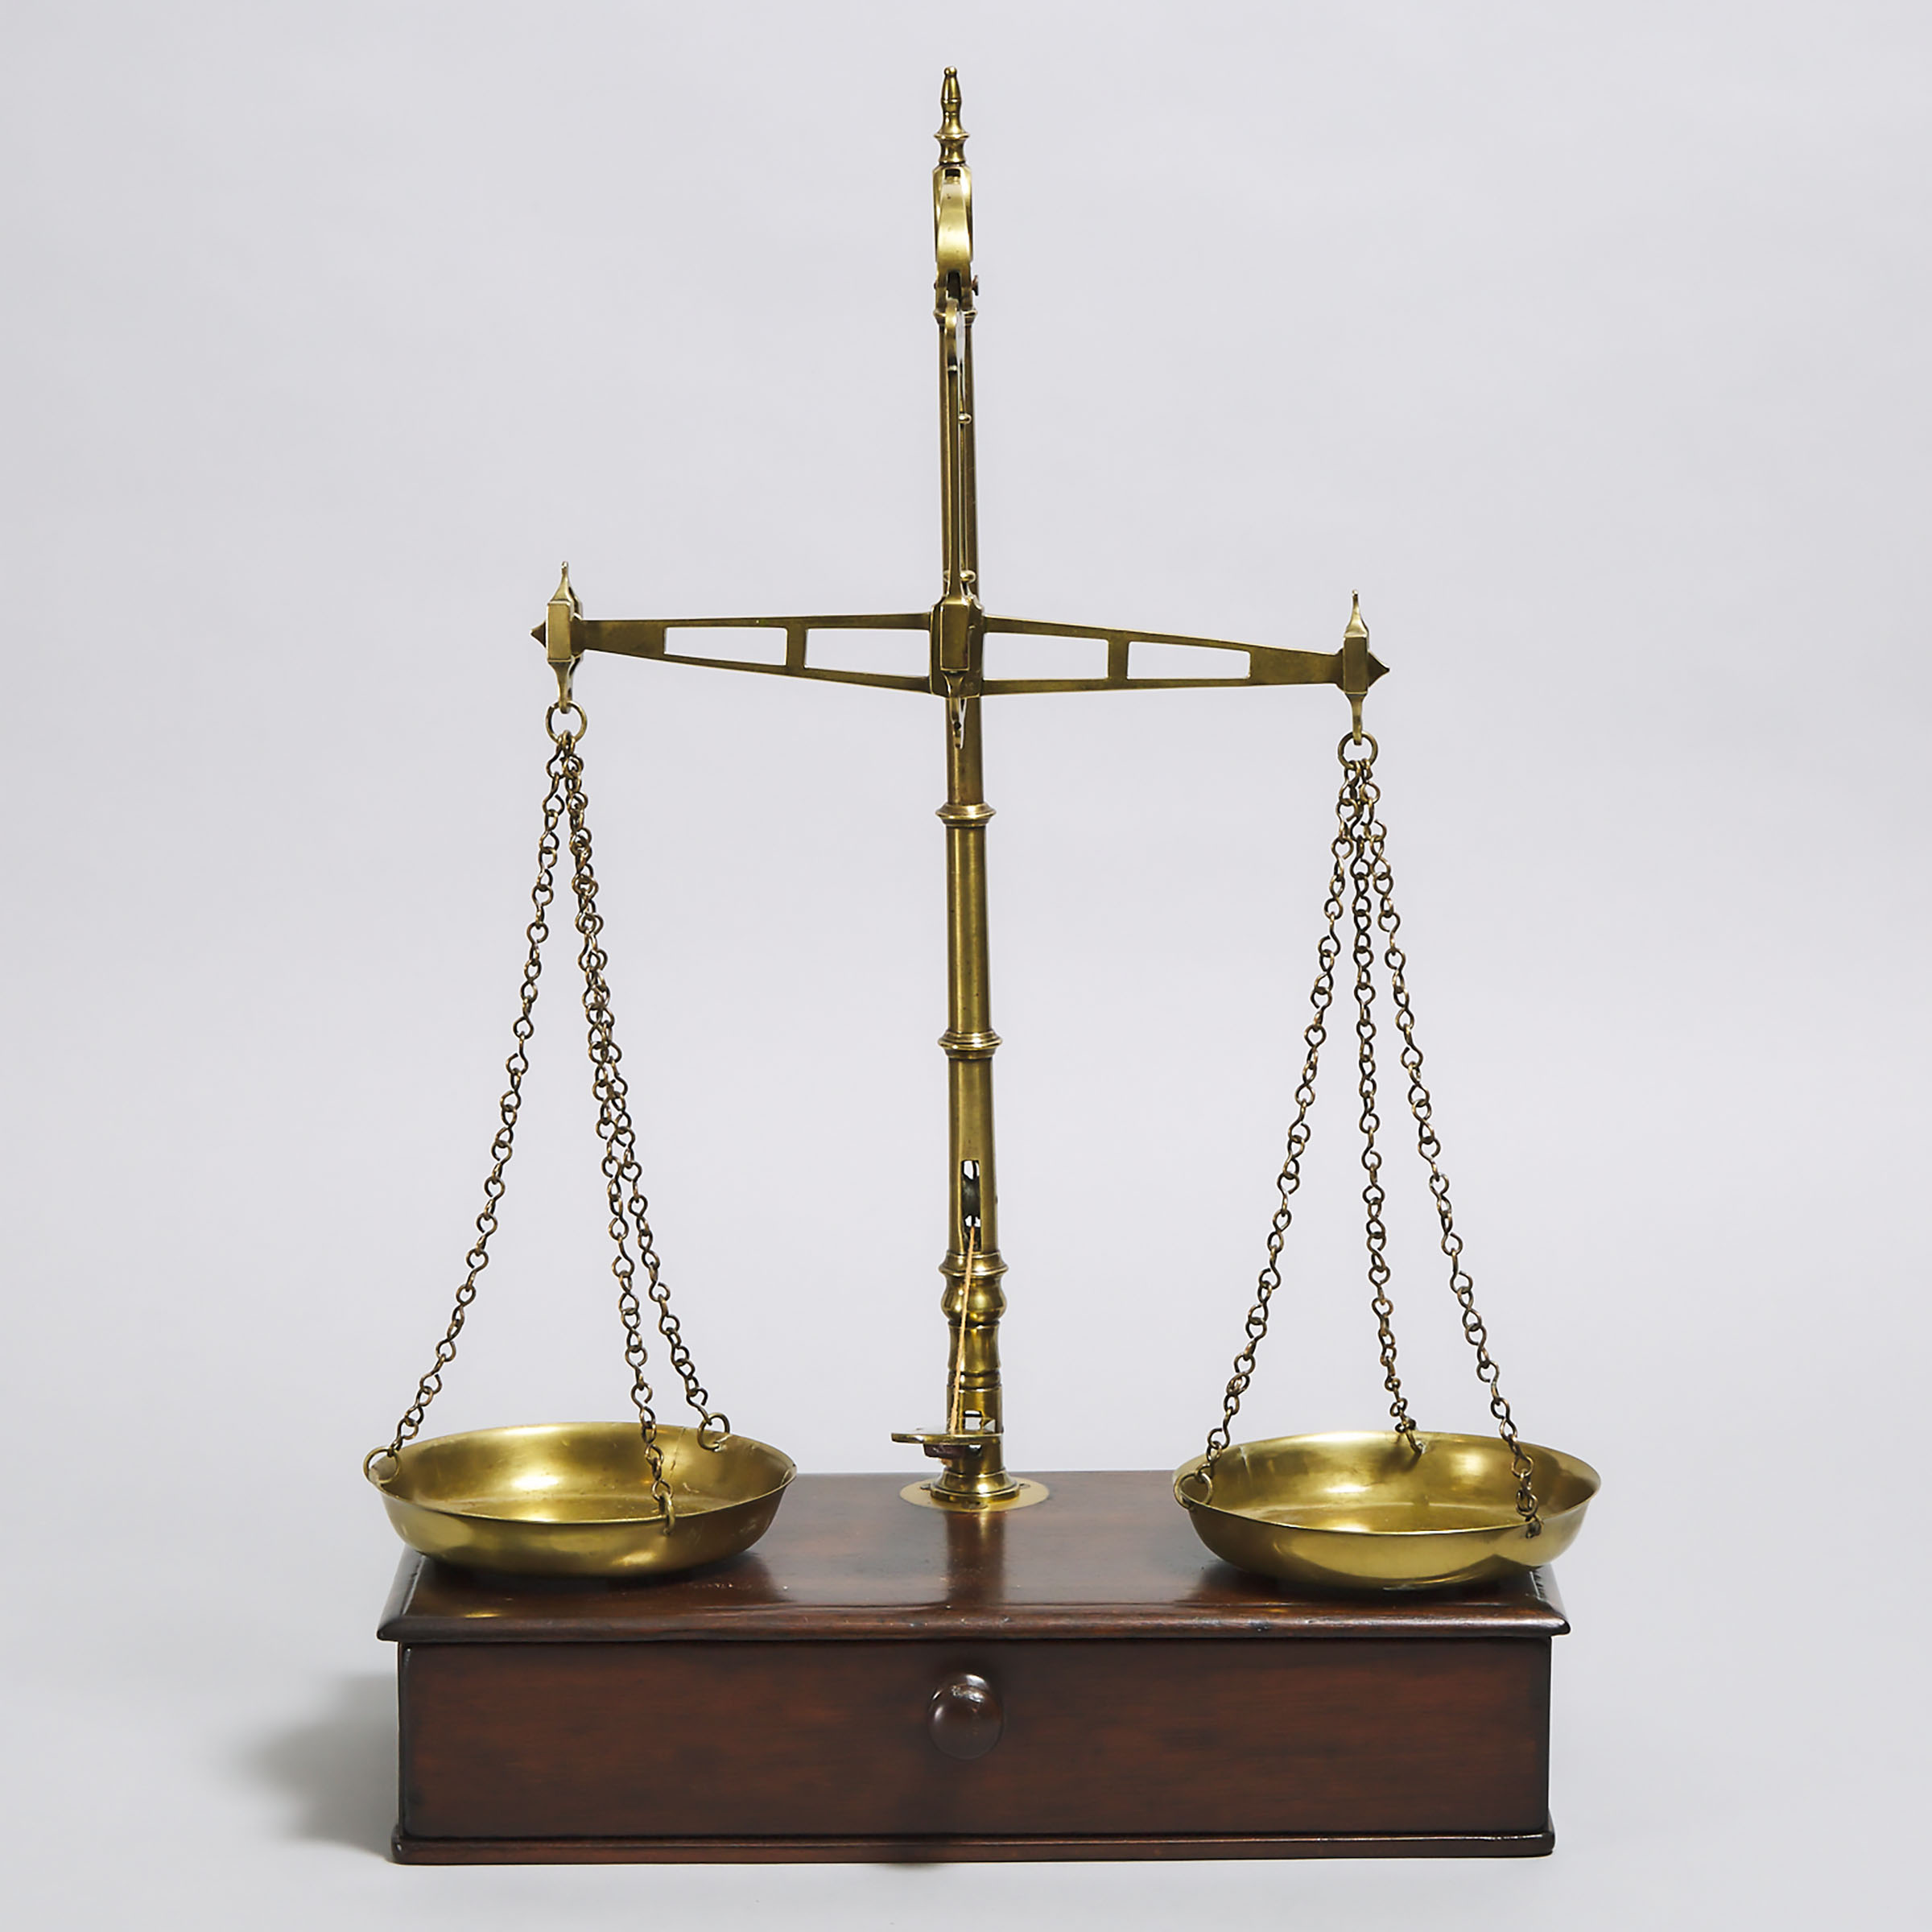 Set of English Brass Equal Arm Balance Scales, W. & T. Avery, Birmingham, mid 19th century